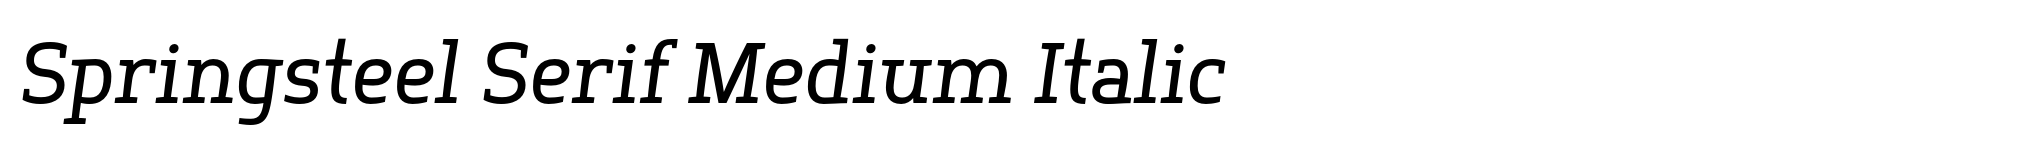 Springsteel Serif Medium Italic image